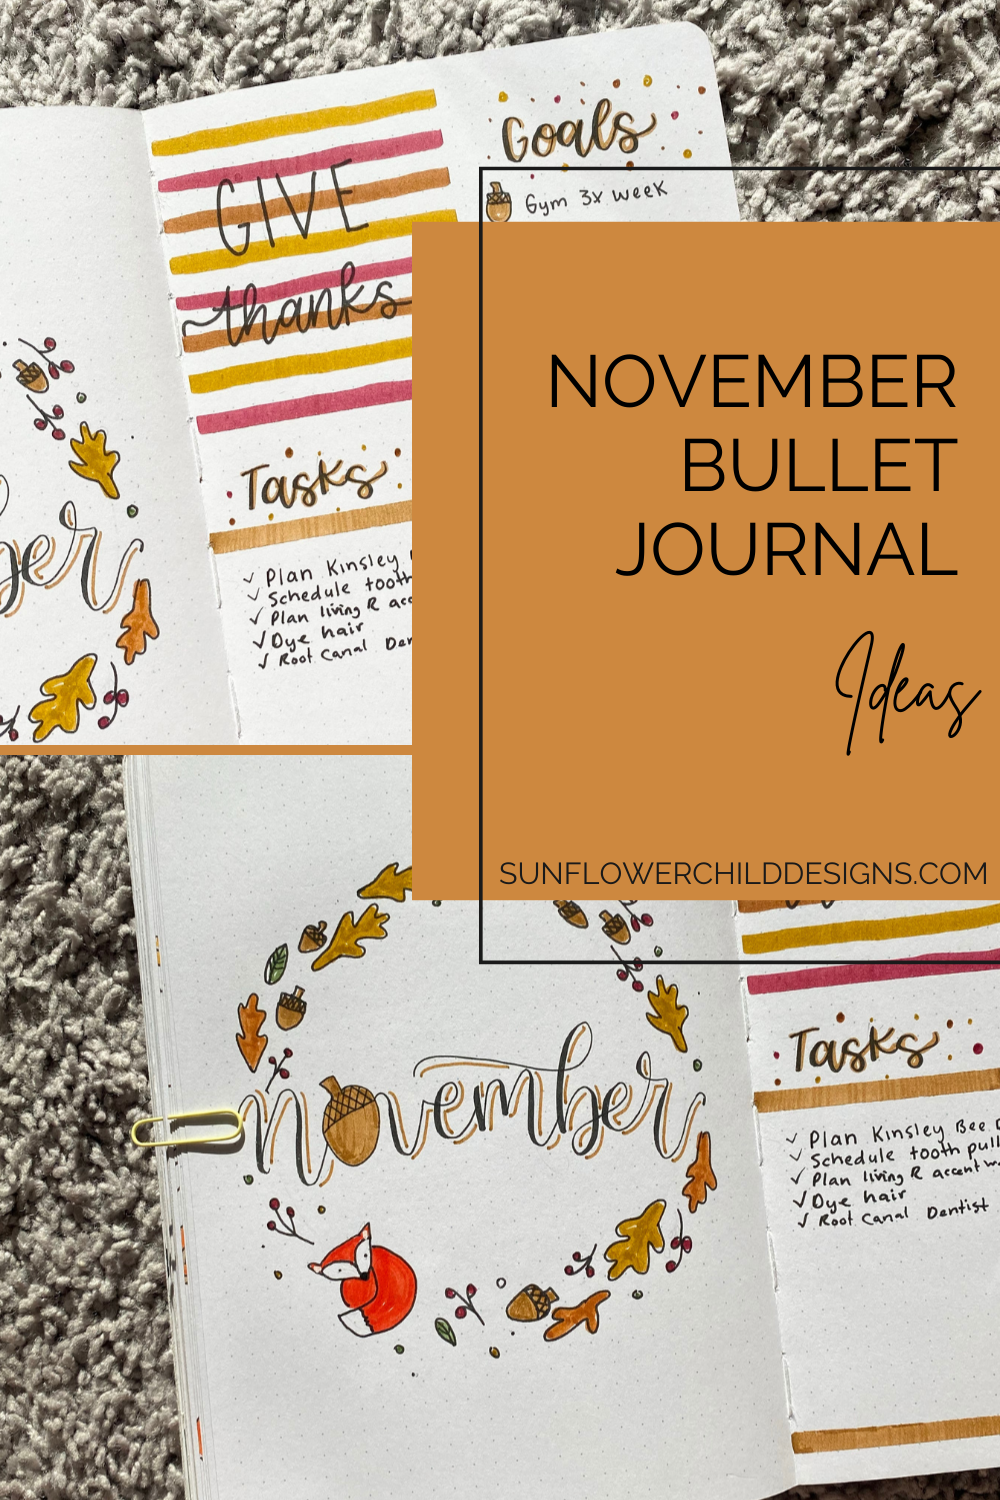 November-bullet-journal-ideas-13.png